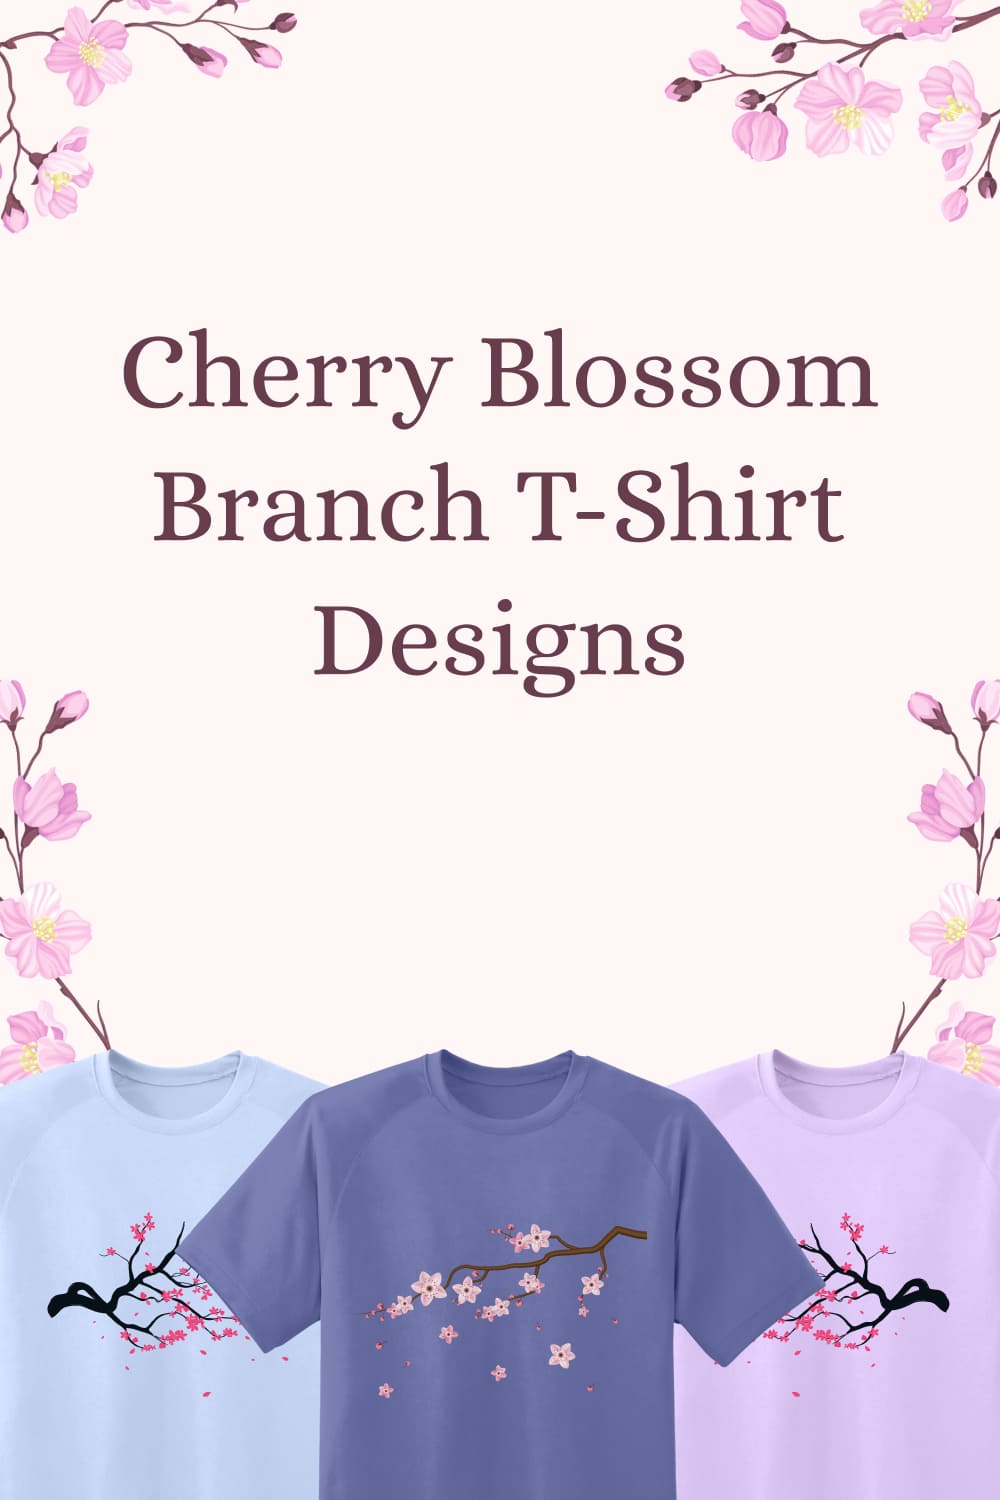 Cherry blossom branch t shirt designs of pinterest.